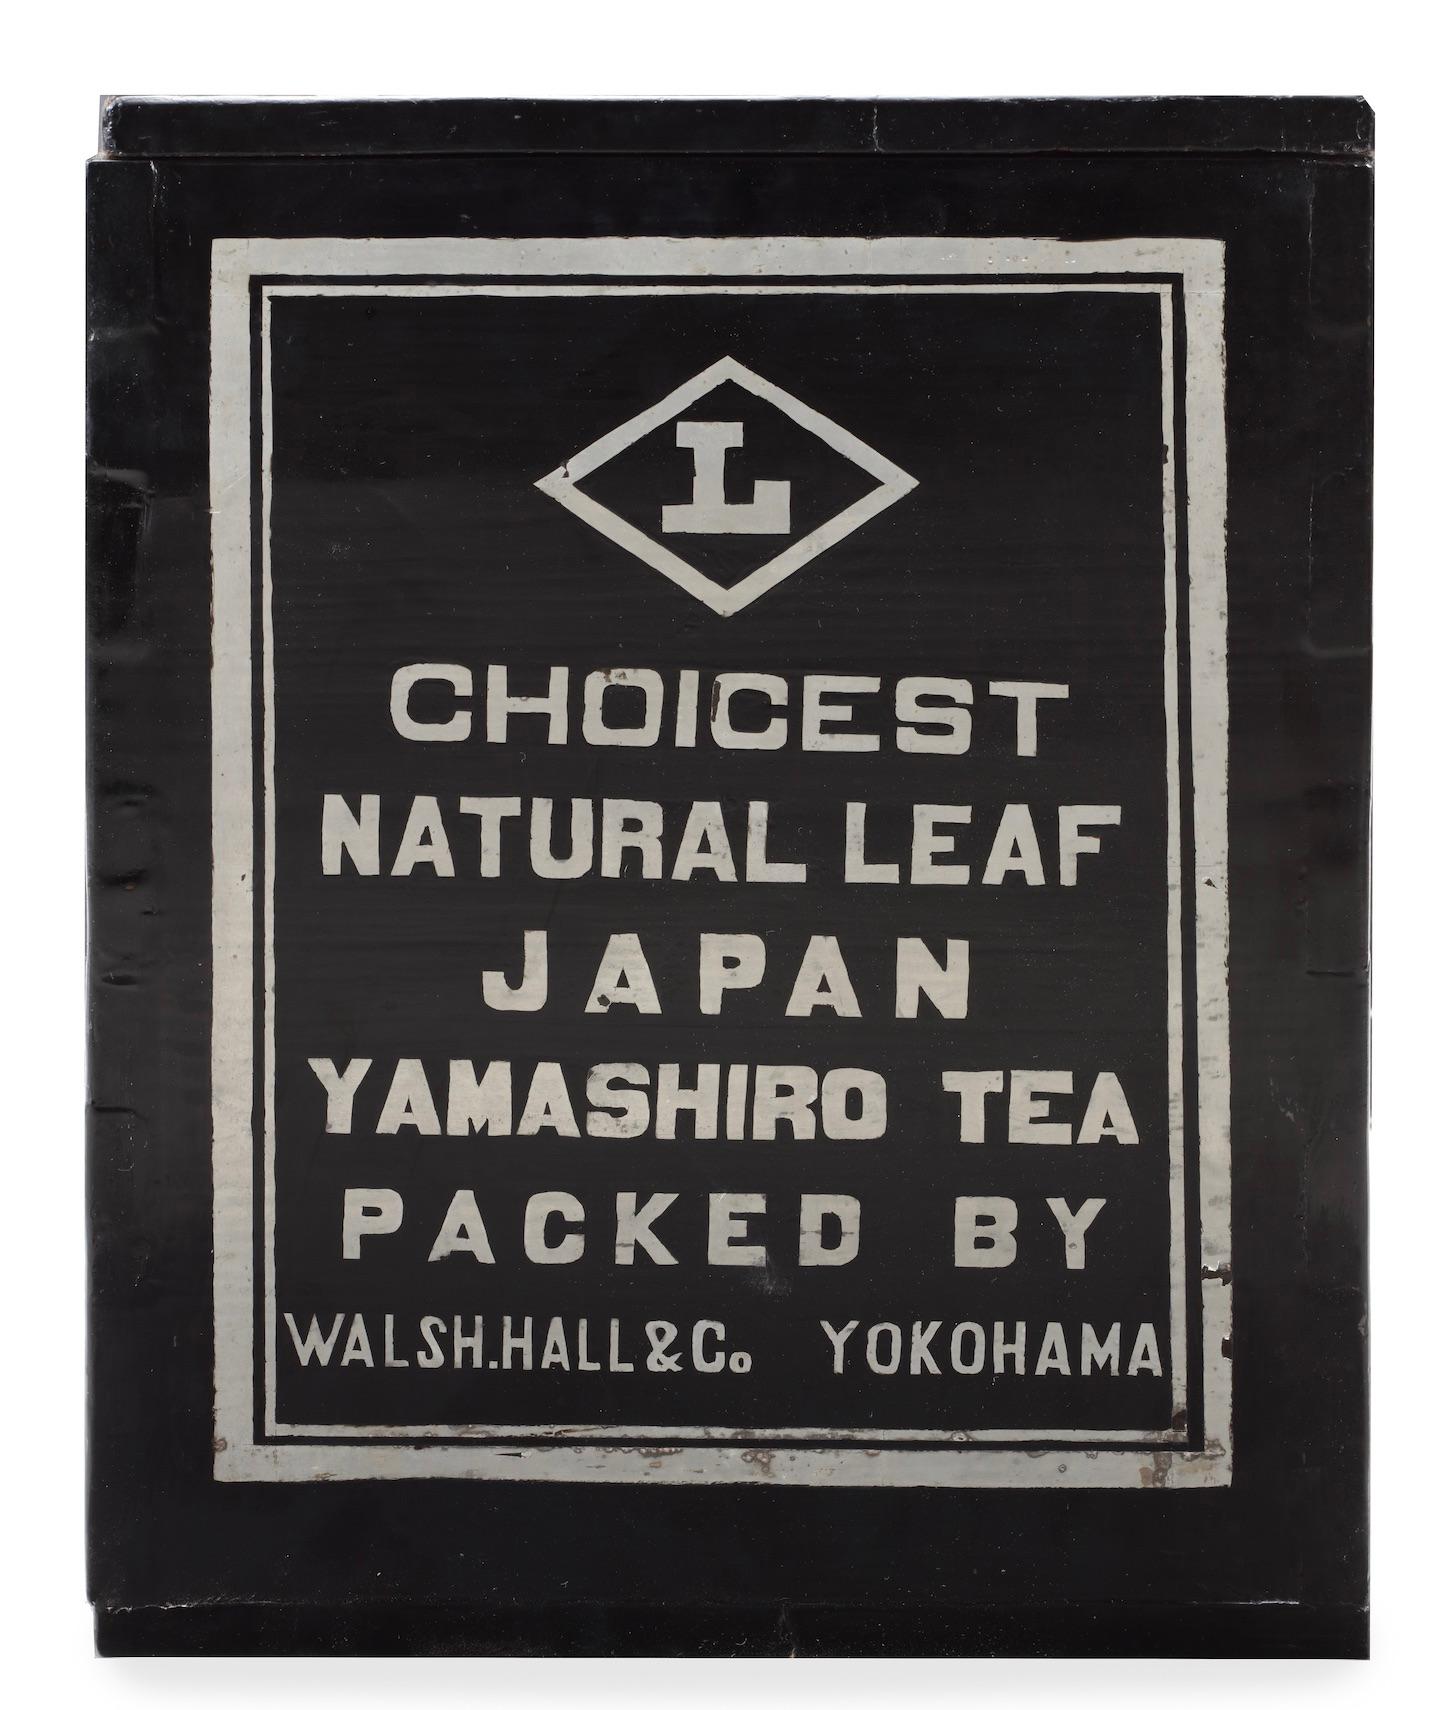 Eine Teekiste aus japanischem Zypressenholz oder Hirohi 'Walsh, Hall & Co, Yokohama

Yokohama, 1862-1897, mit der Inschrift: Choicest Natural Leaf Yamashiro Tea, verpackt von Walsh, Hall & Co, Yokohama

Maße: H. 53,5 x B. 61,5 x T. 41,5